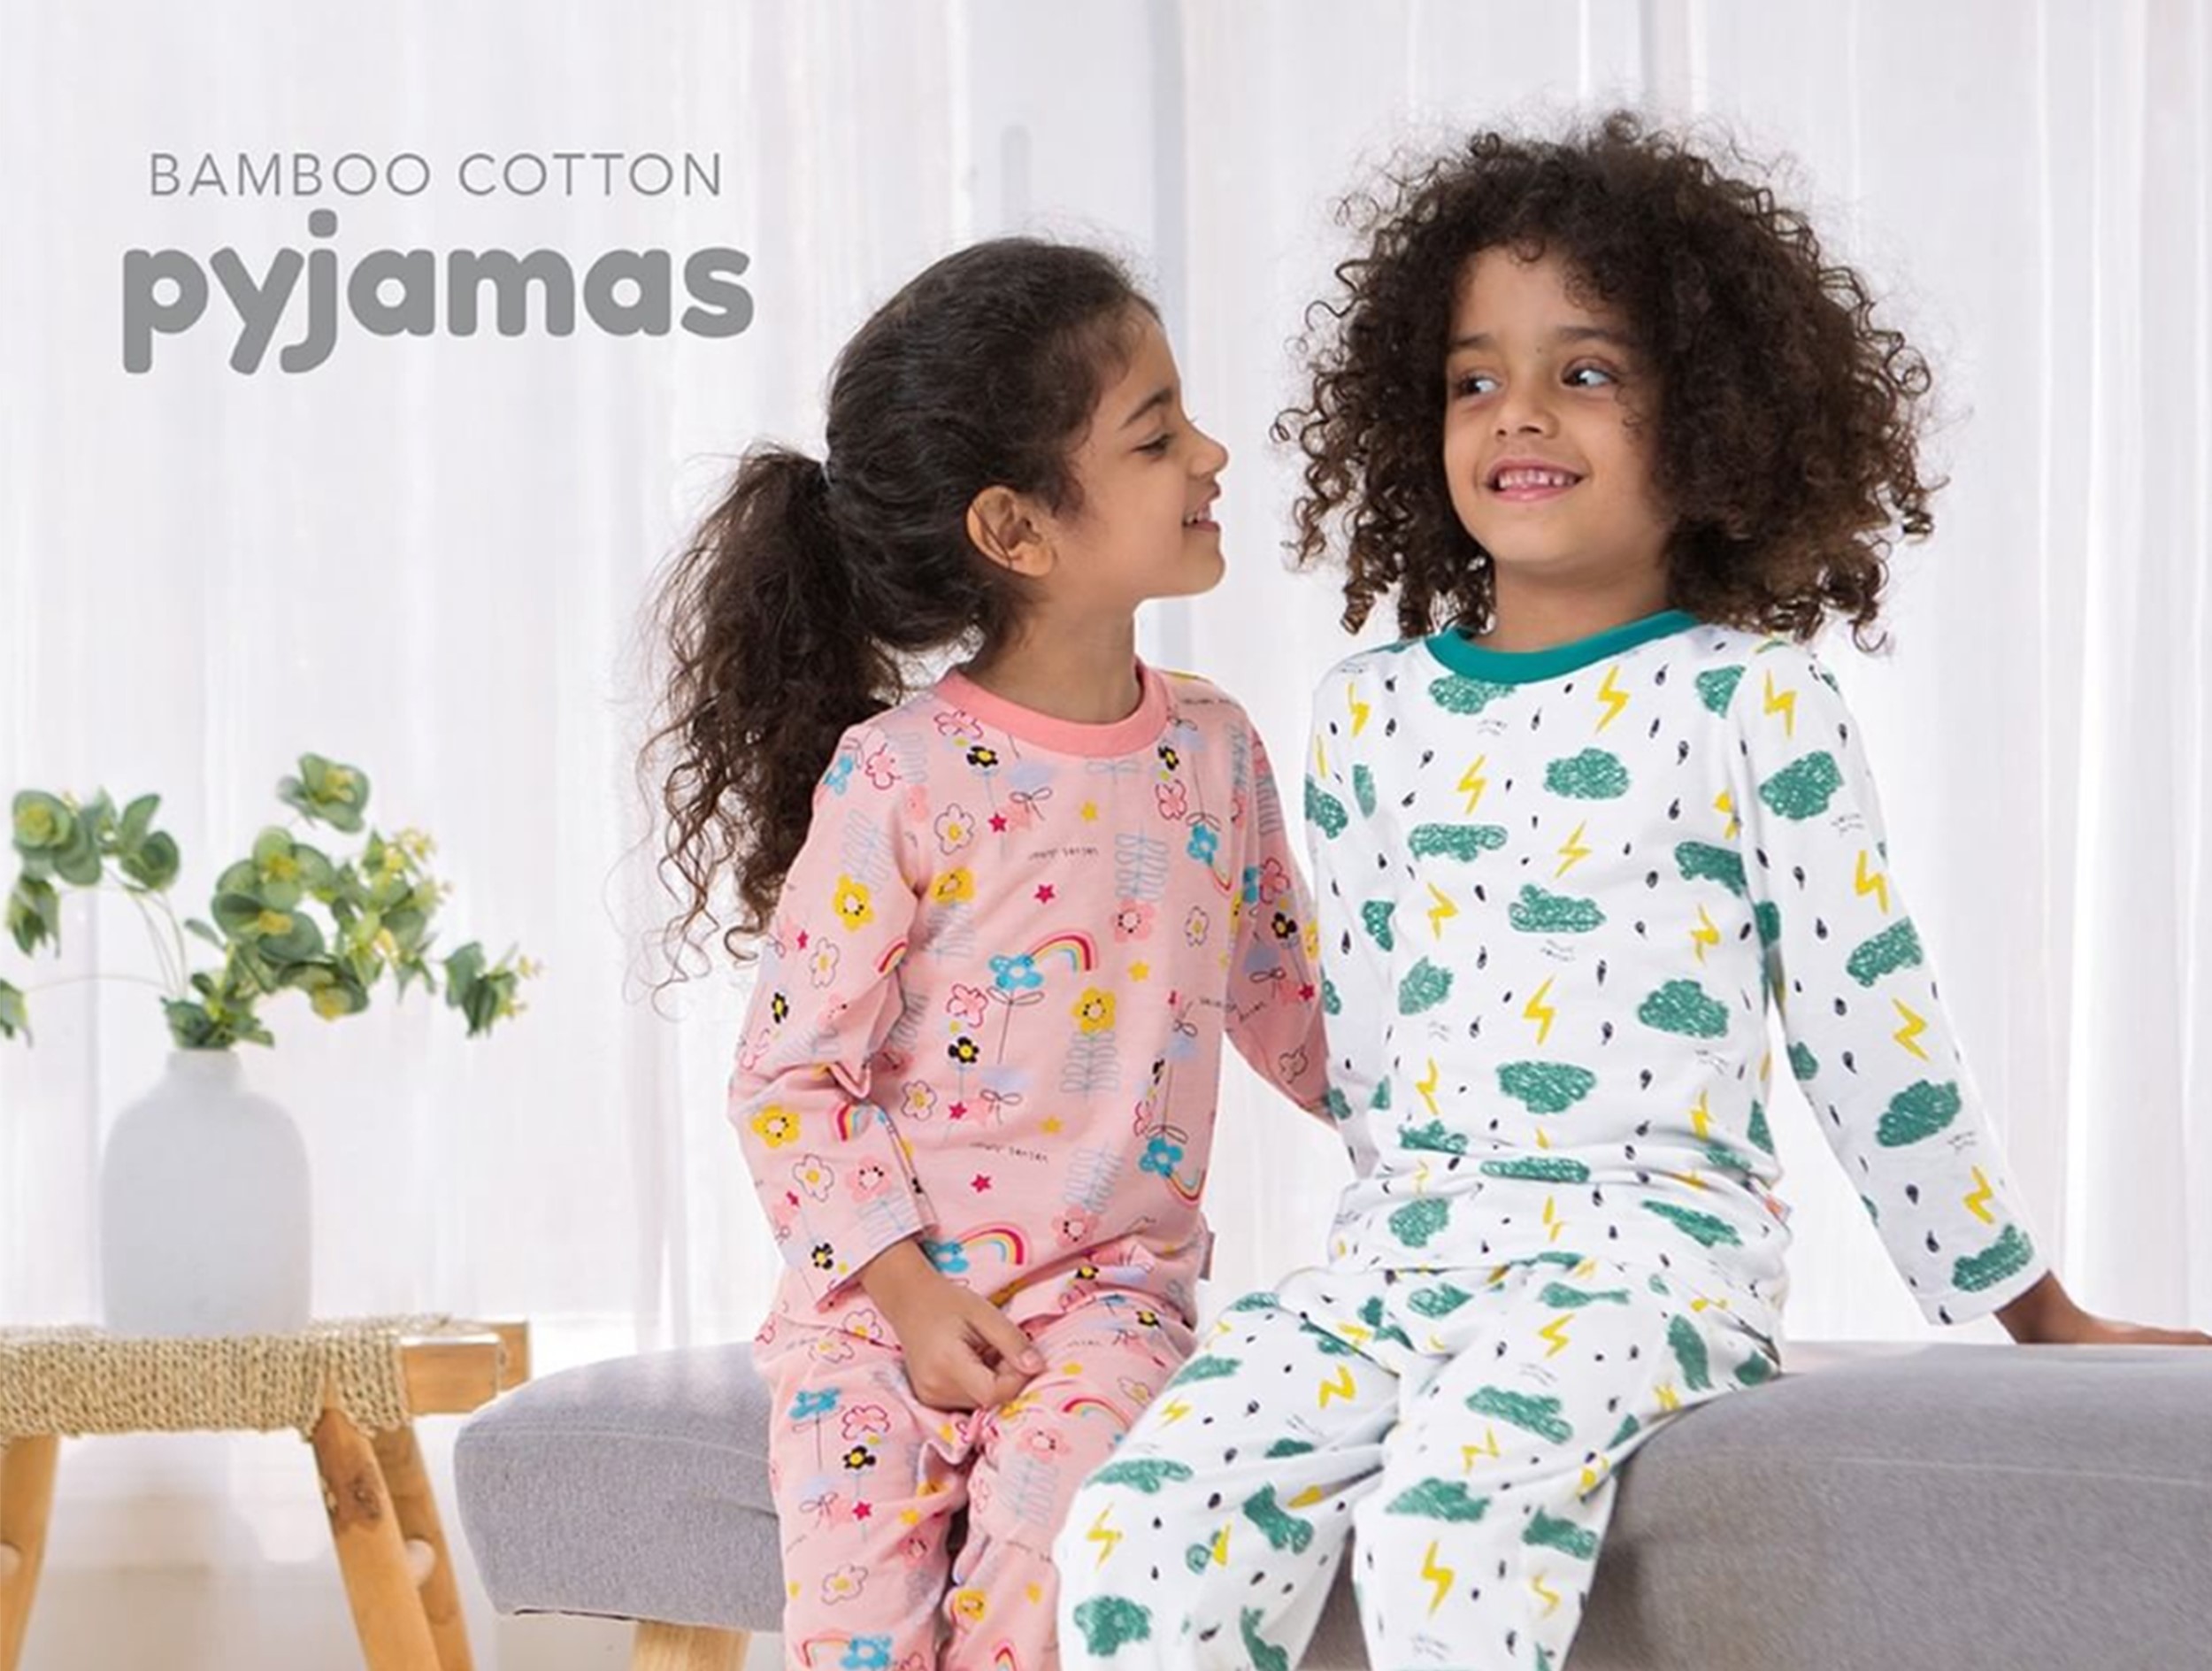 velvet junior bamboo cotton pyjamas